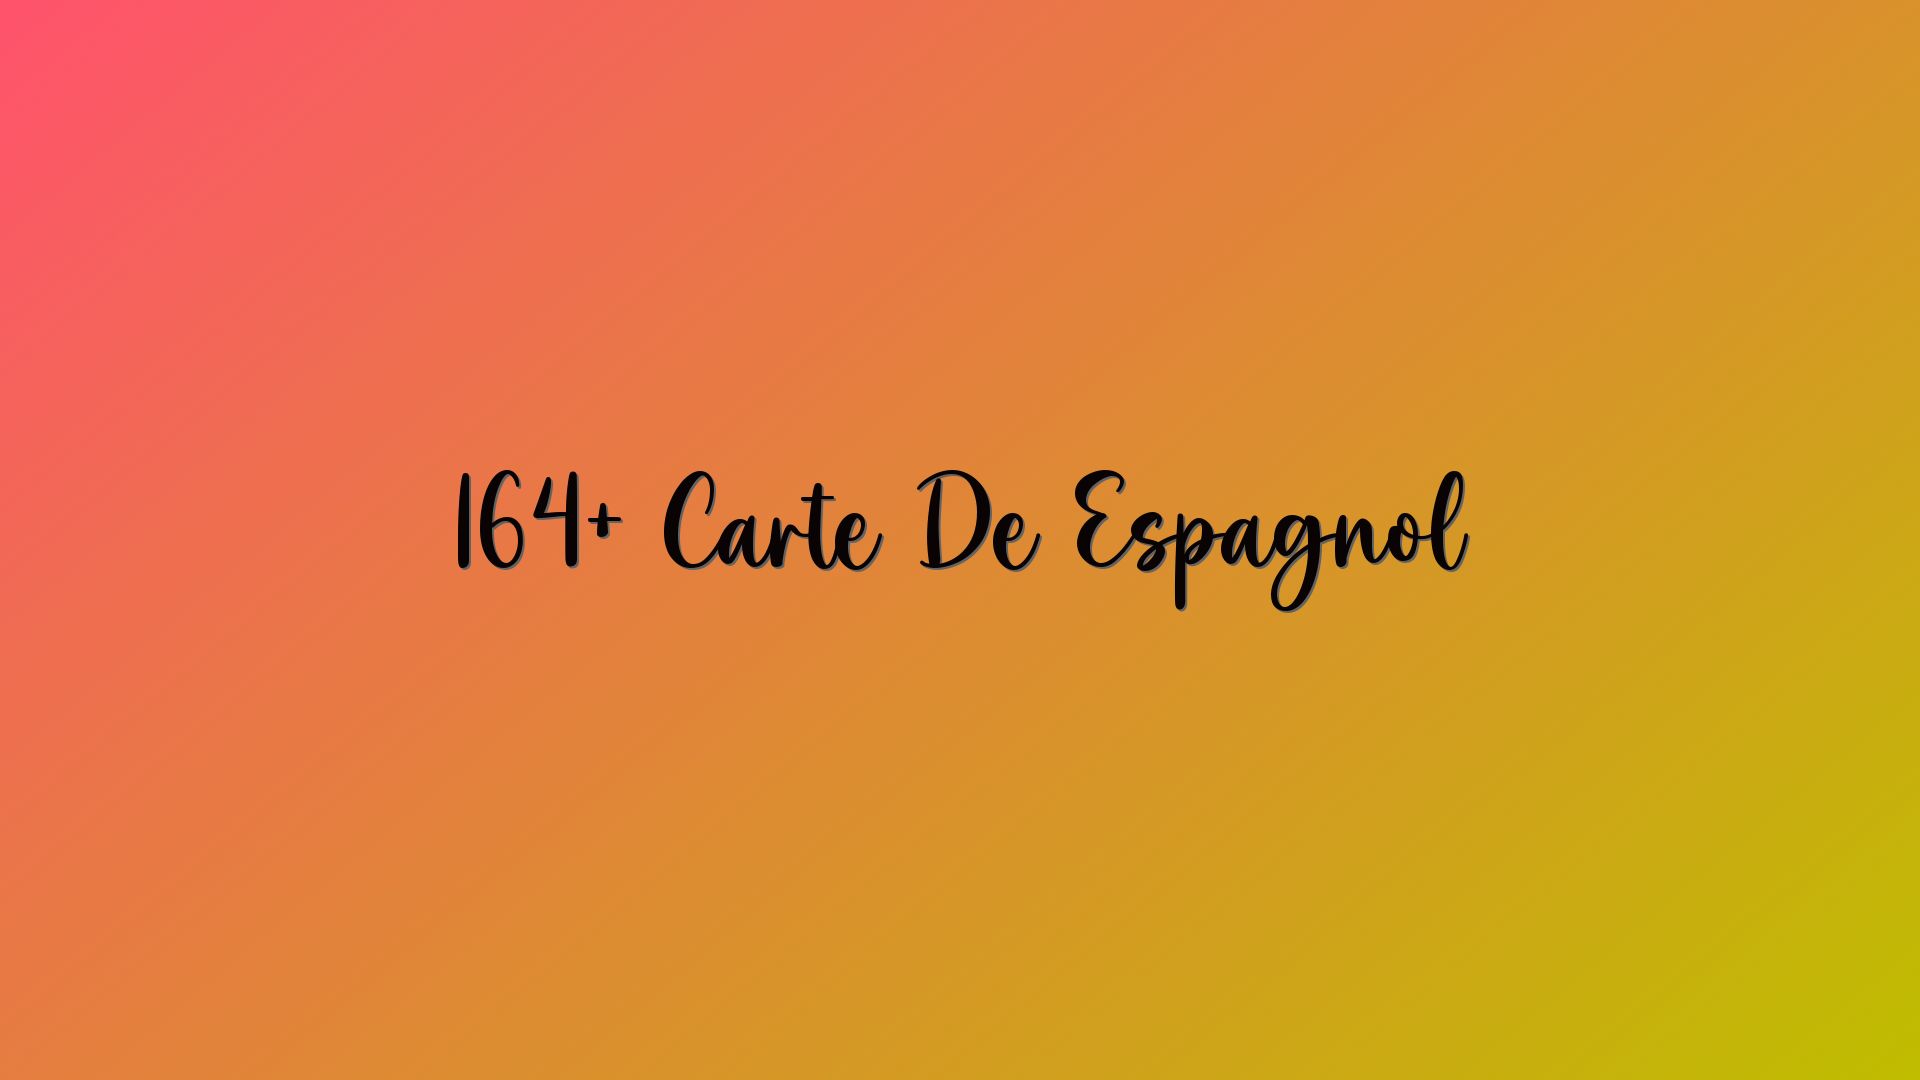 164+ Carte De Espagnol